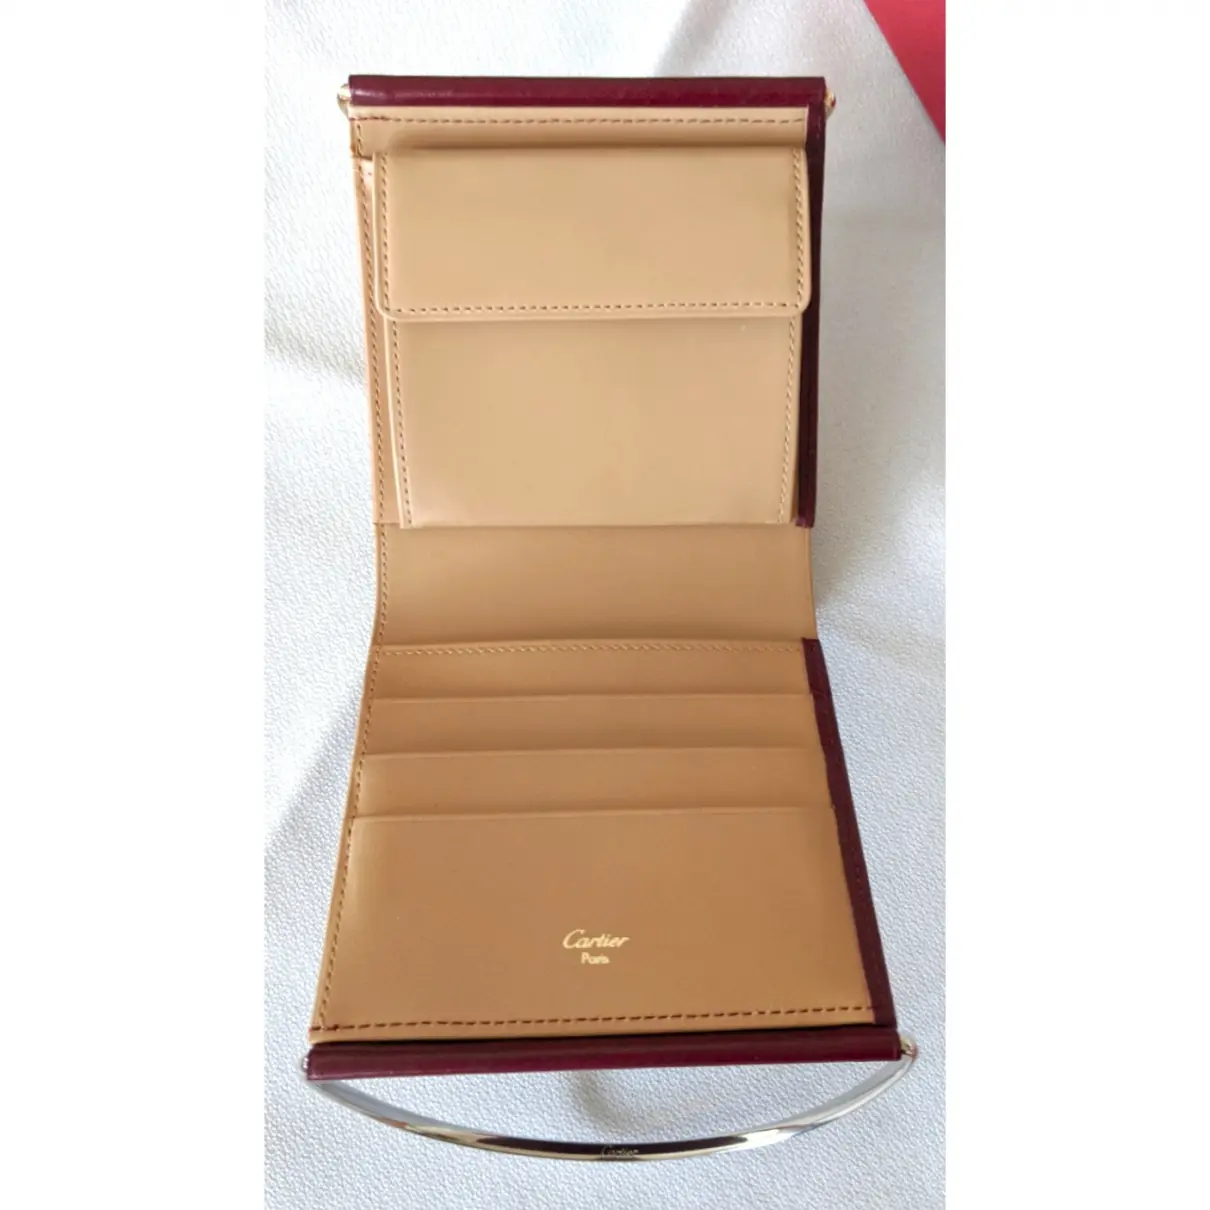 Buy Cartier Leather handbag online - Vintage